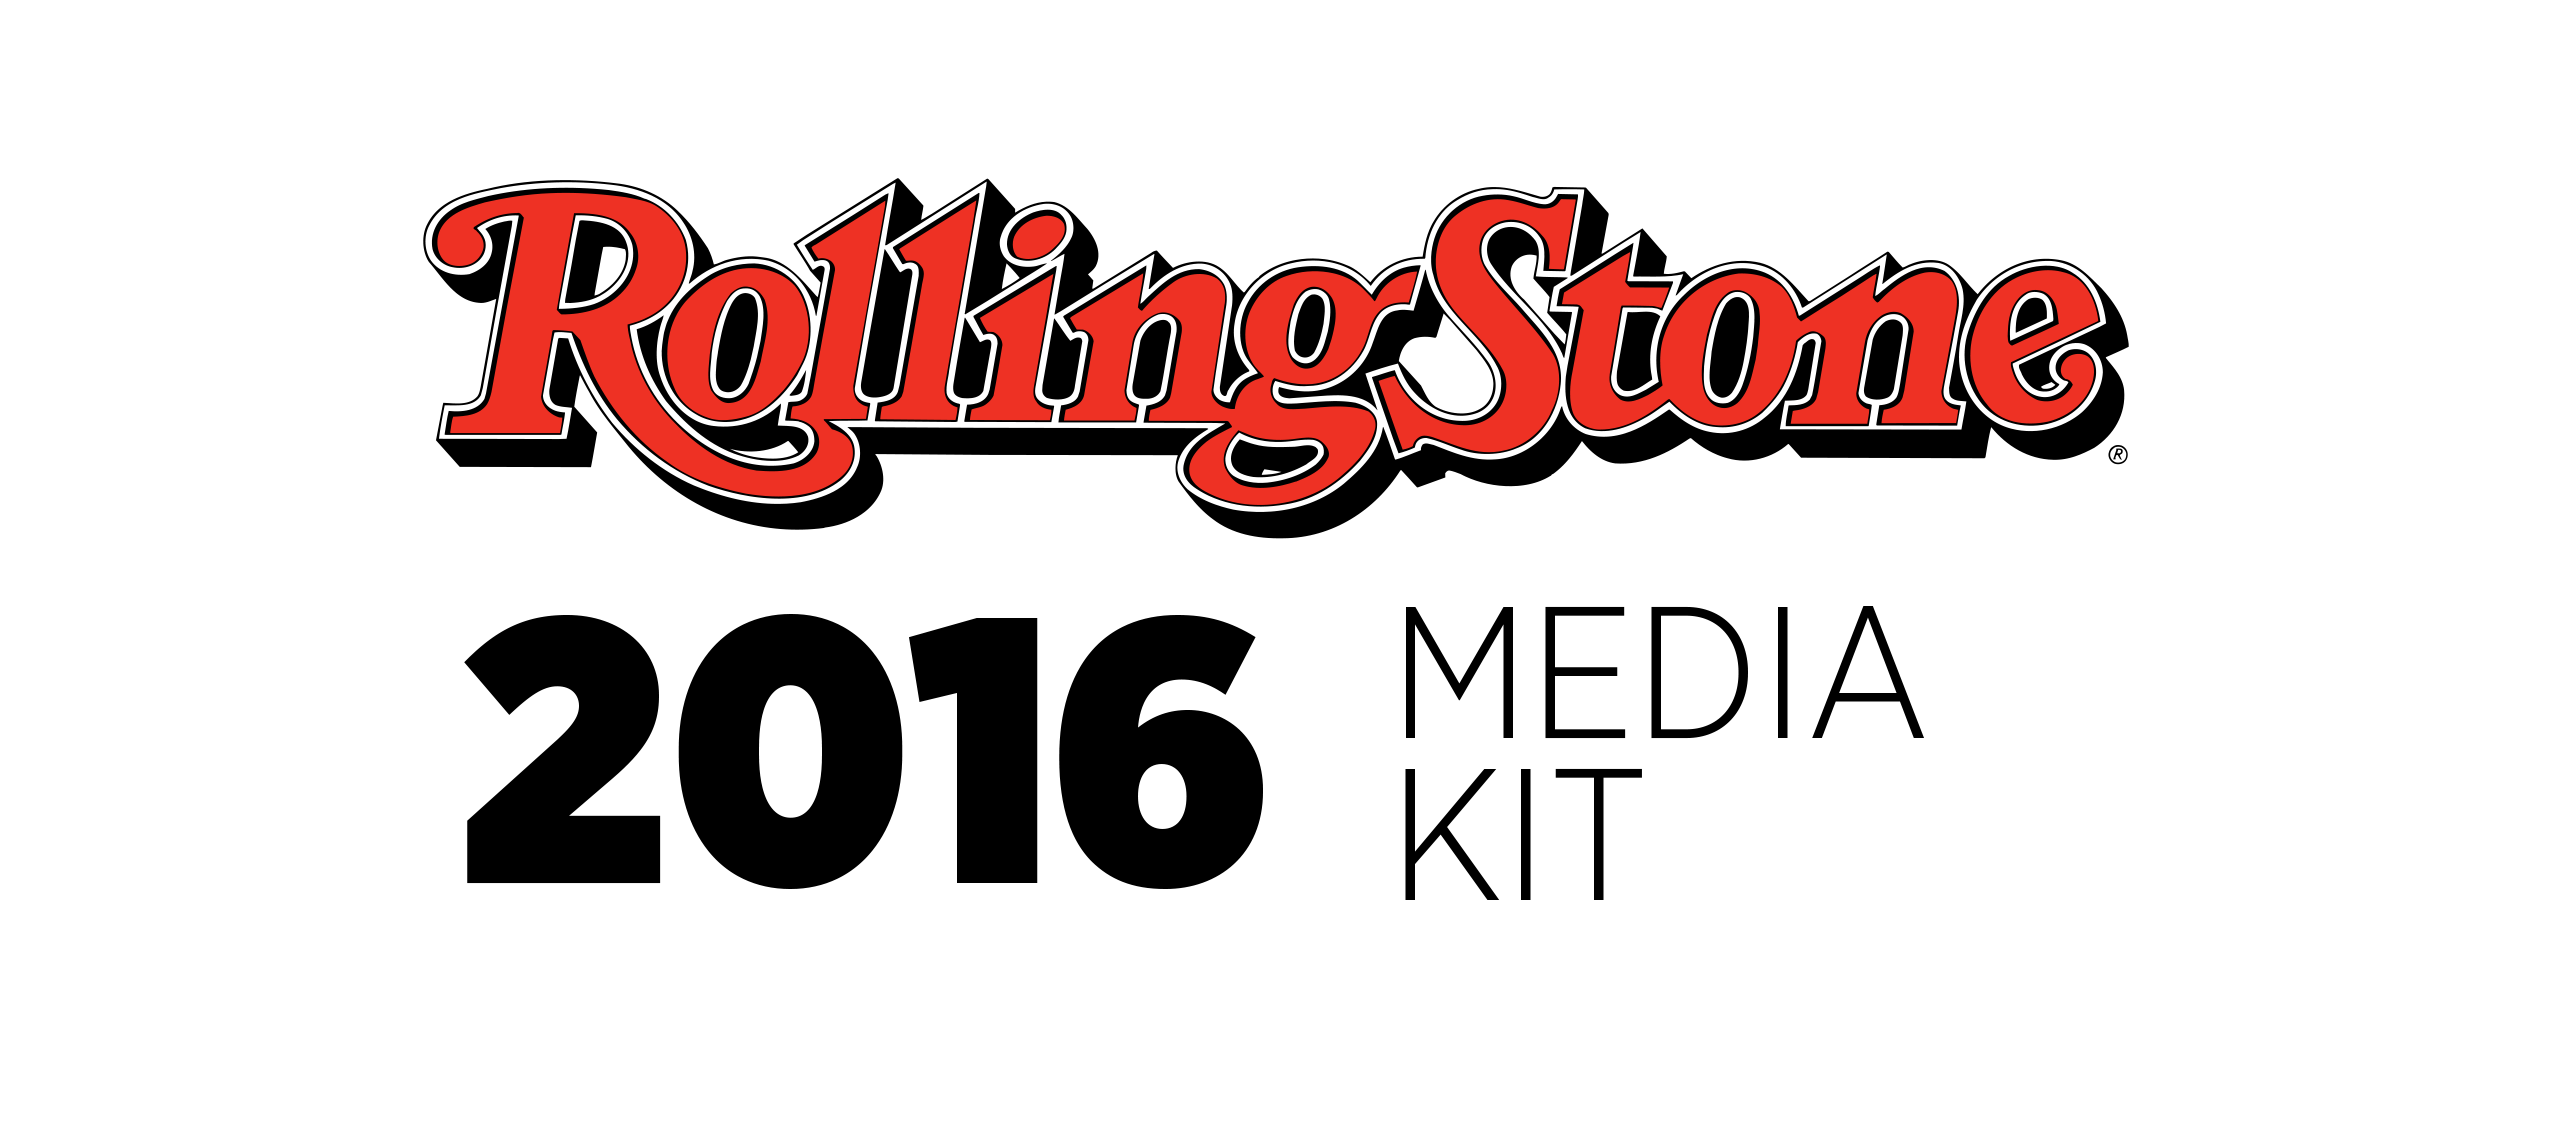 Rolling stone magazine clipart 